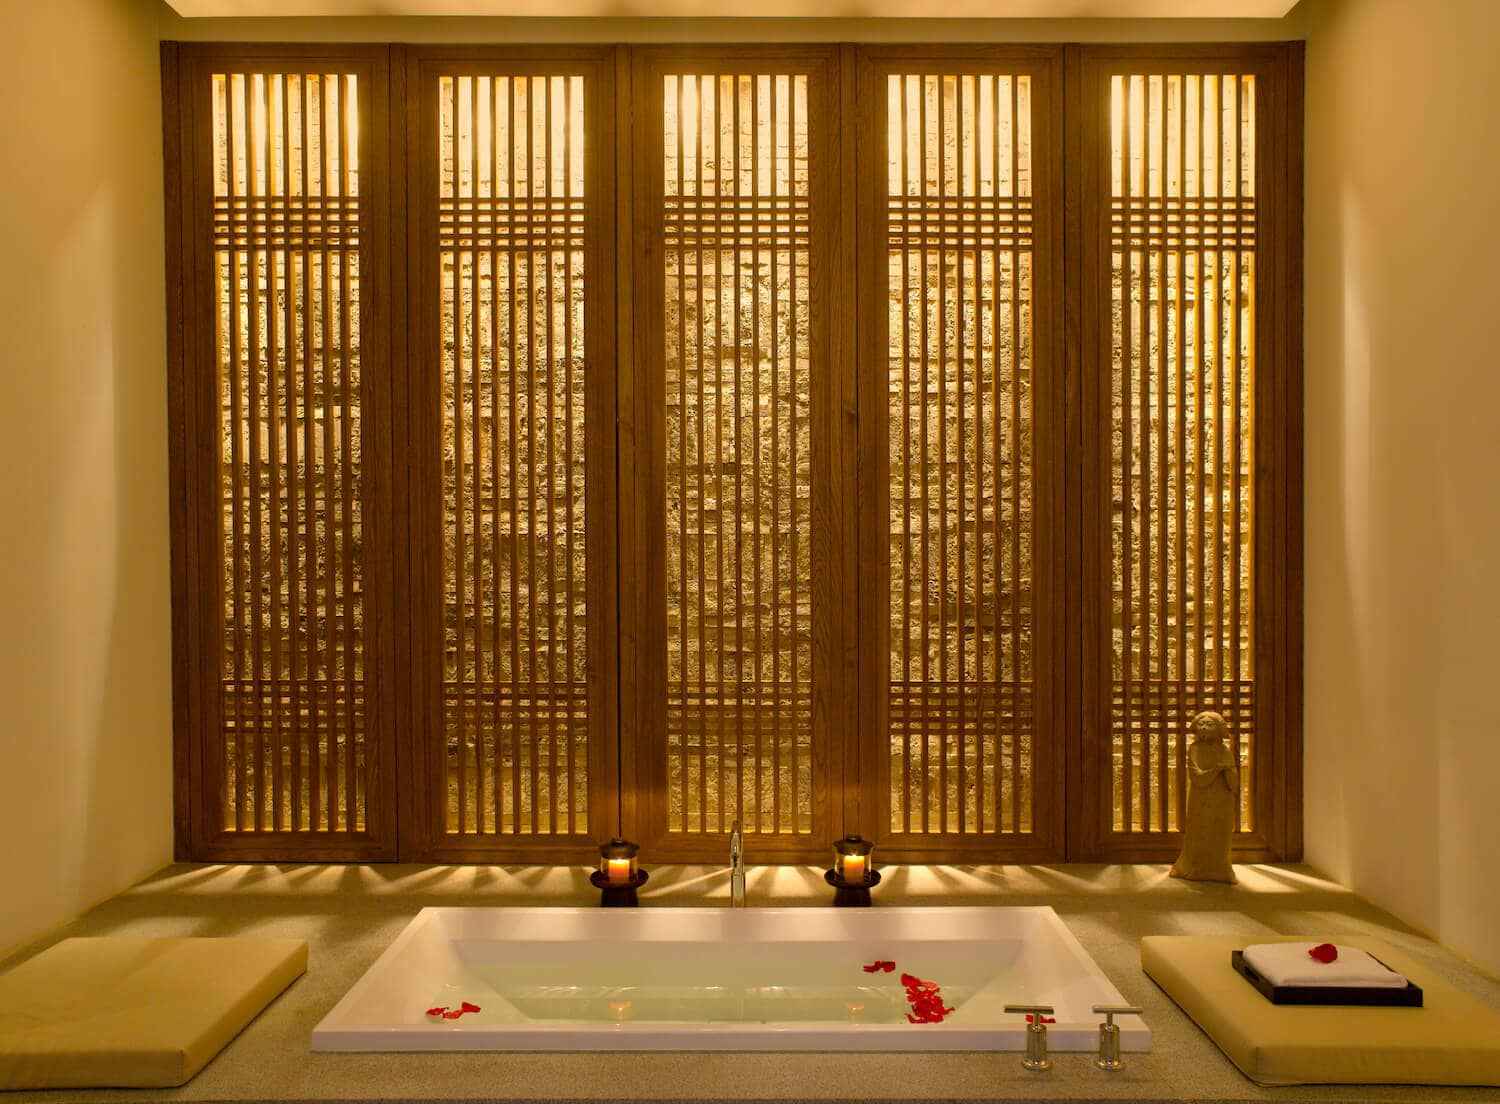 Aman Summer Palace, china, beijing, urban retreat, luxury wellness retreat, spa retreat, spacation, beijing wellness